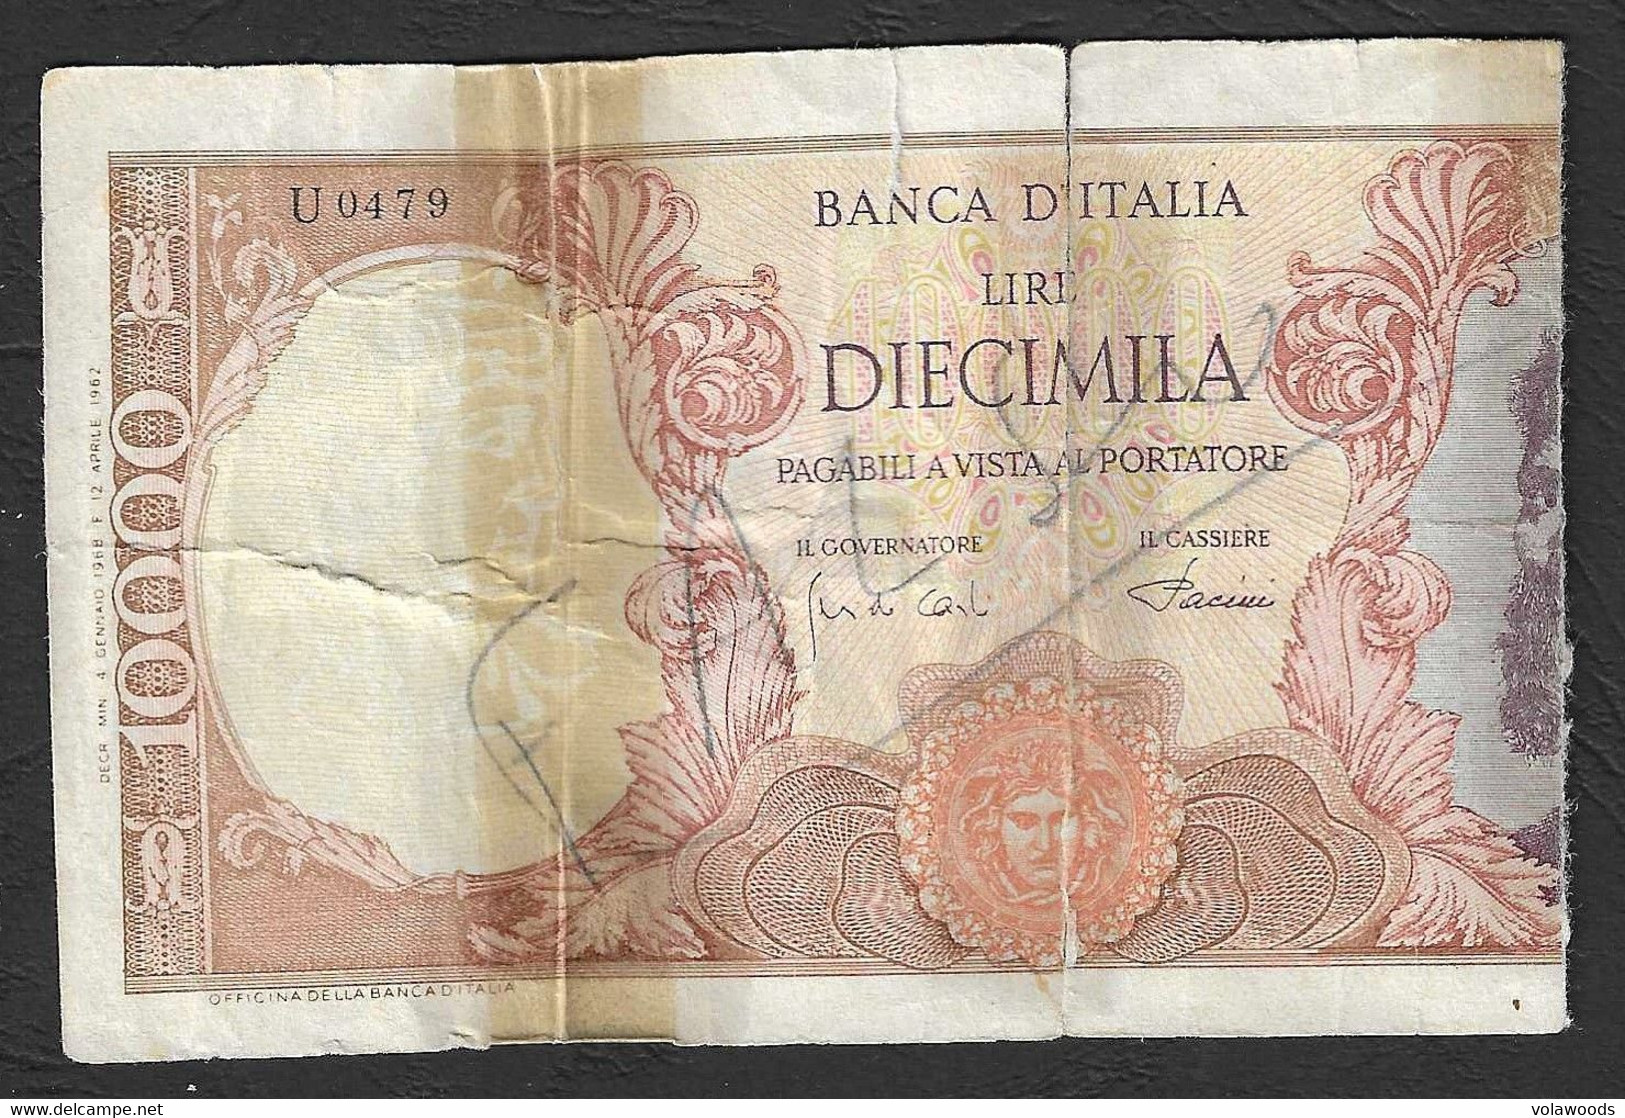 Italia - Banconota Circolata Da 10.000 Lire "Buonarroti" Falso D'epoca Circolato P-97d - 1968 - [ 8] Vals En Specimen